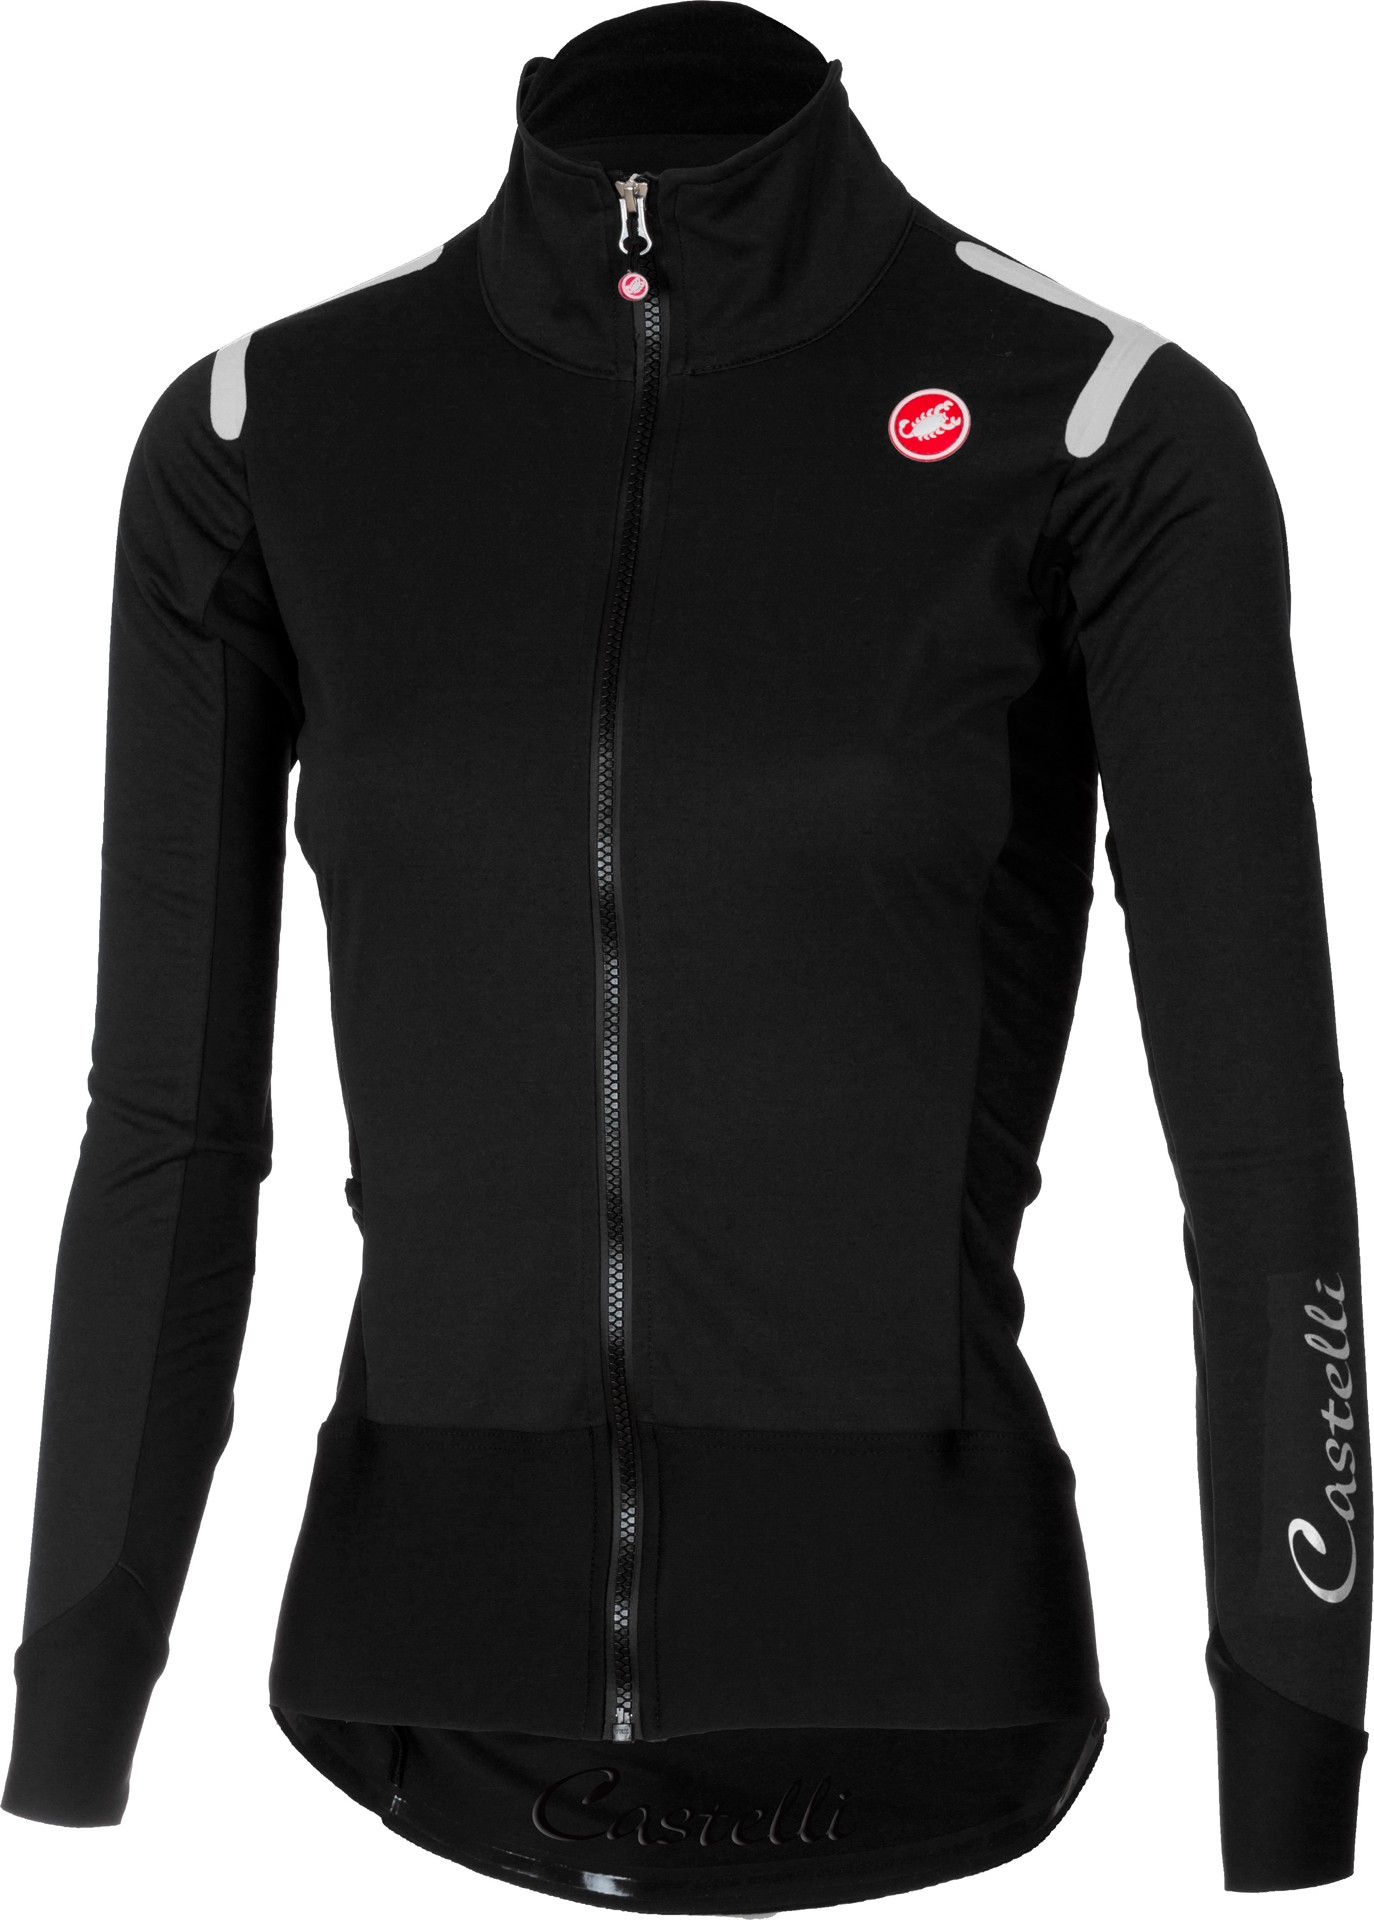 Castelli alpha ros w light veste de cyclisme femme noir clair